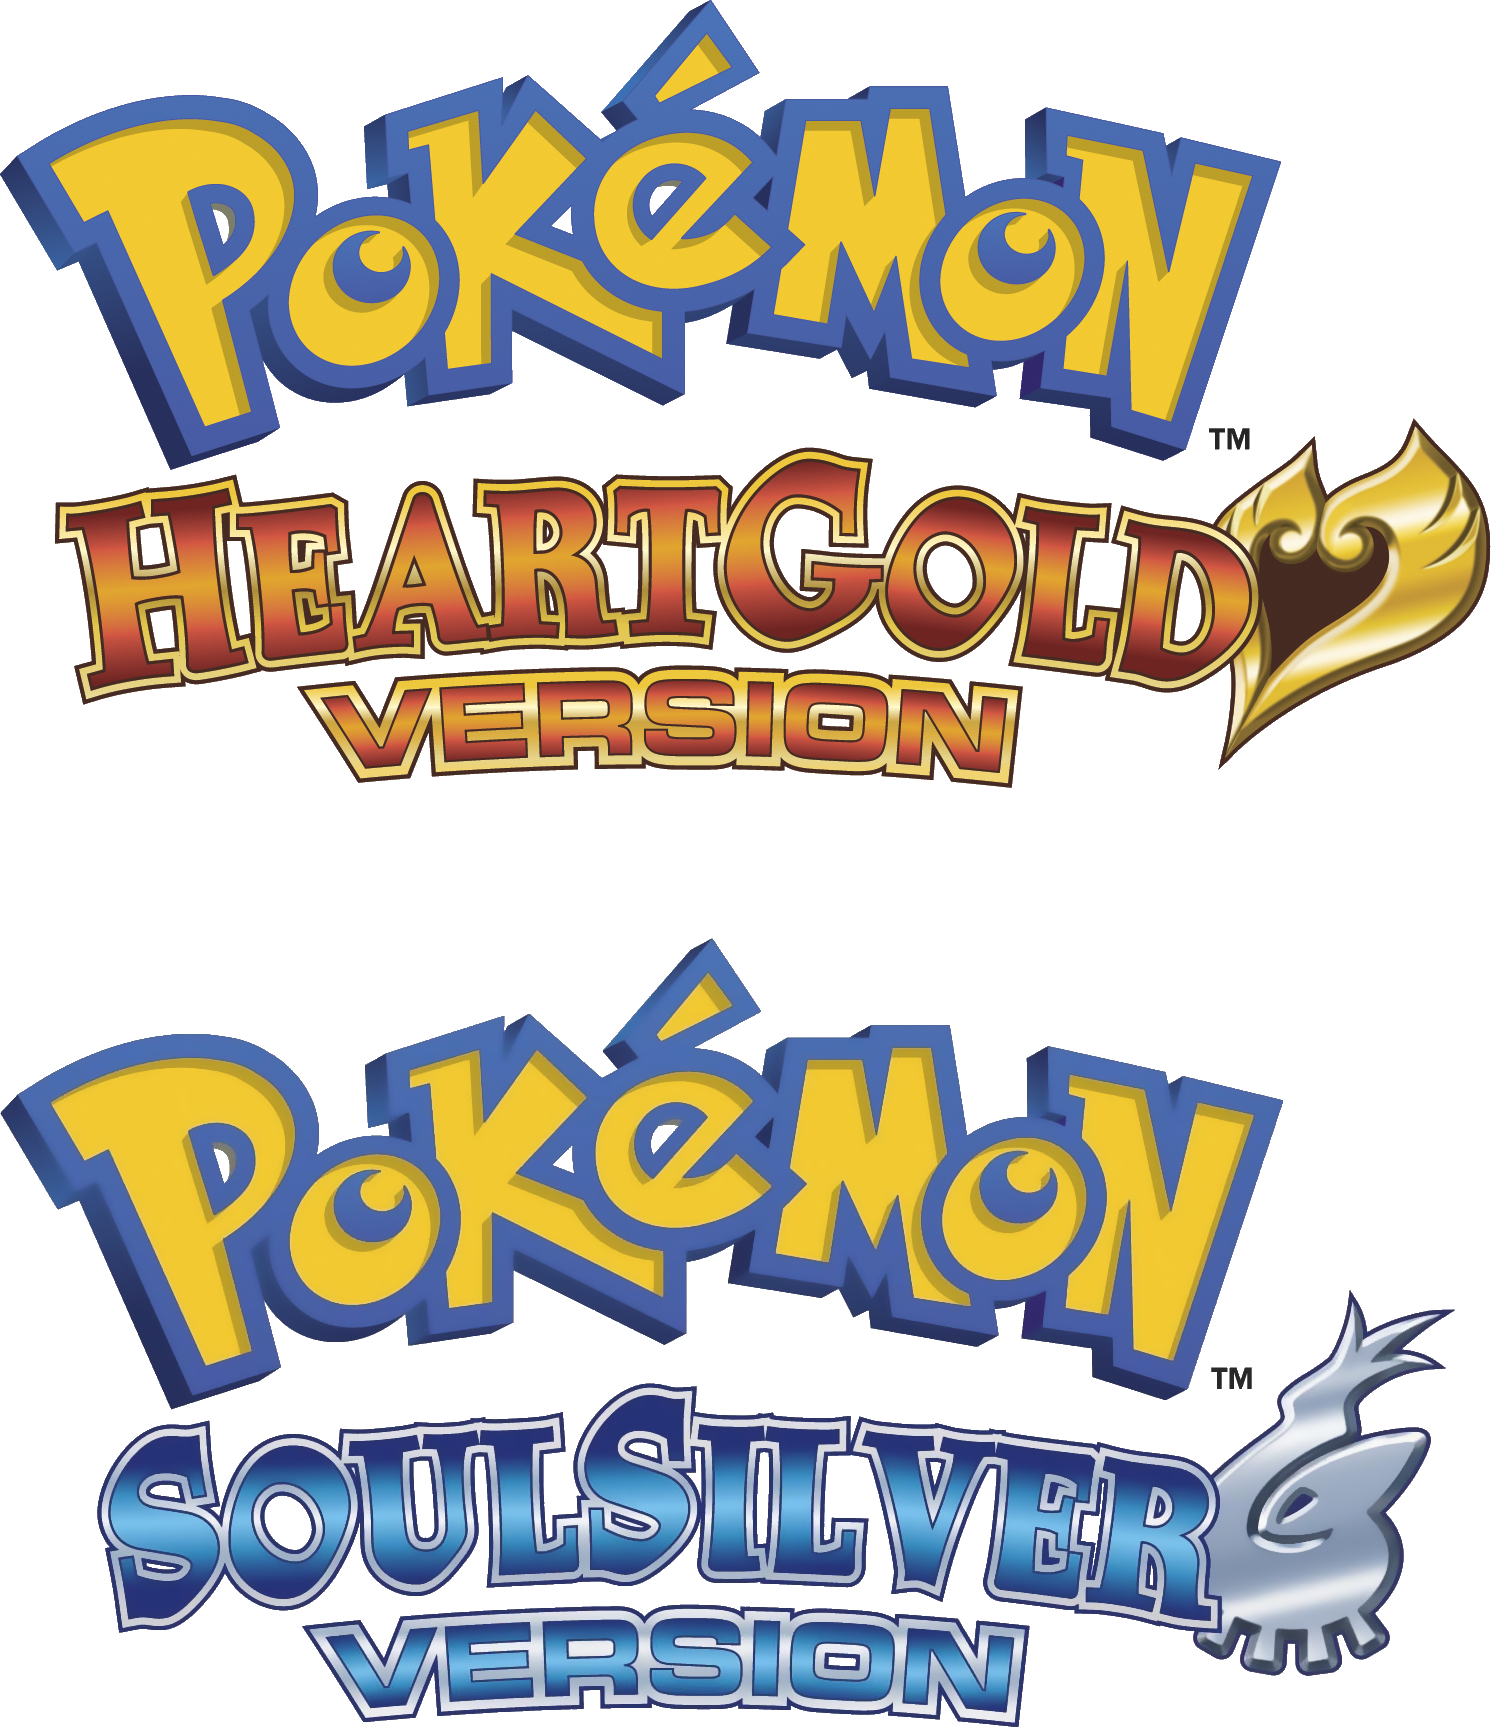 Pokémon HeartGold y Pokémon SoulSilver-Reseña. — Steemit